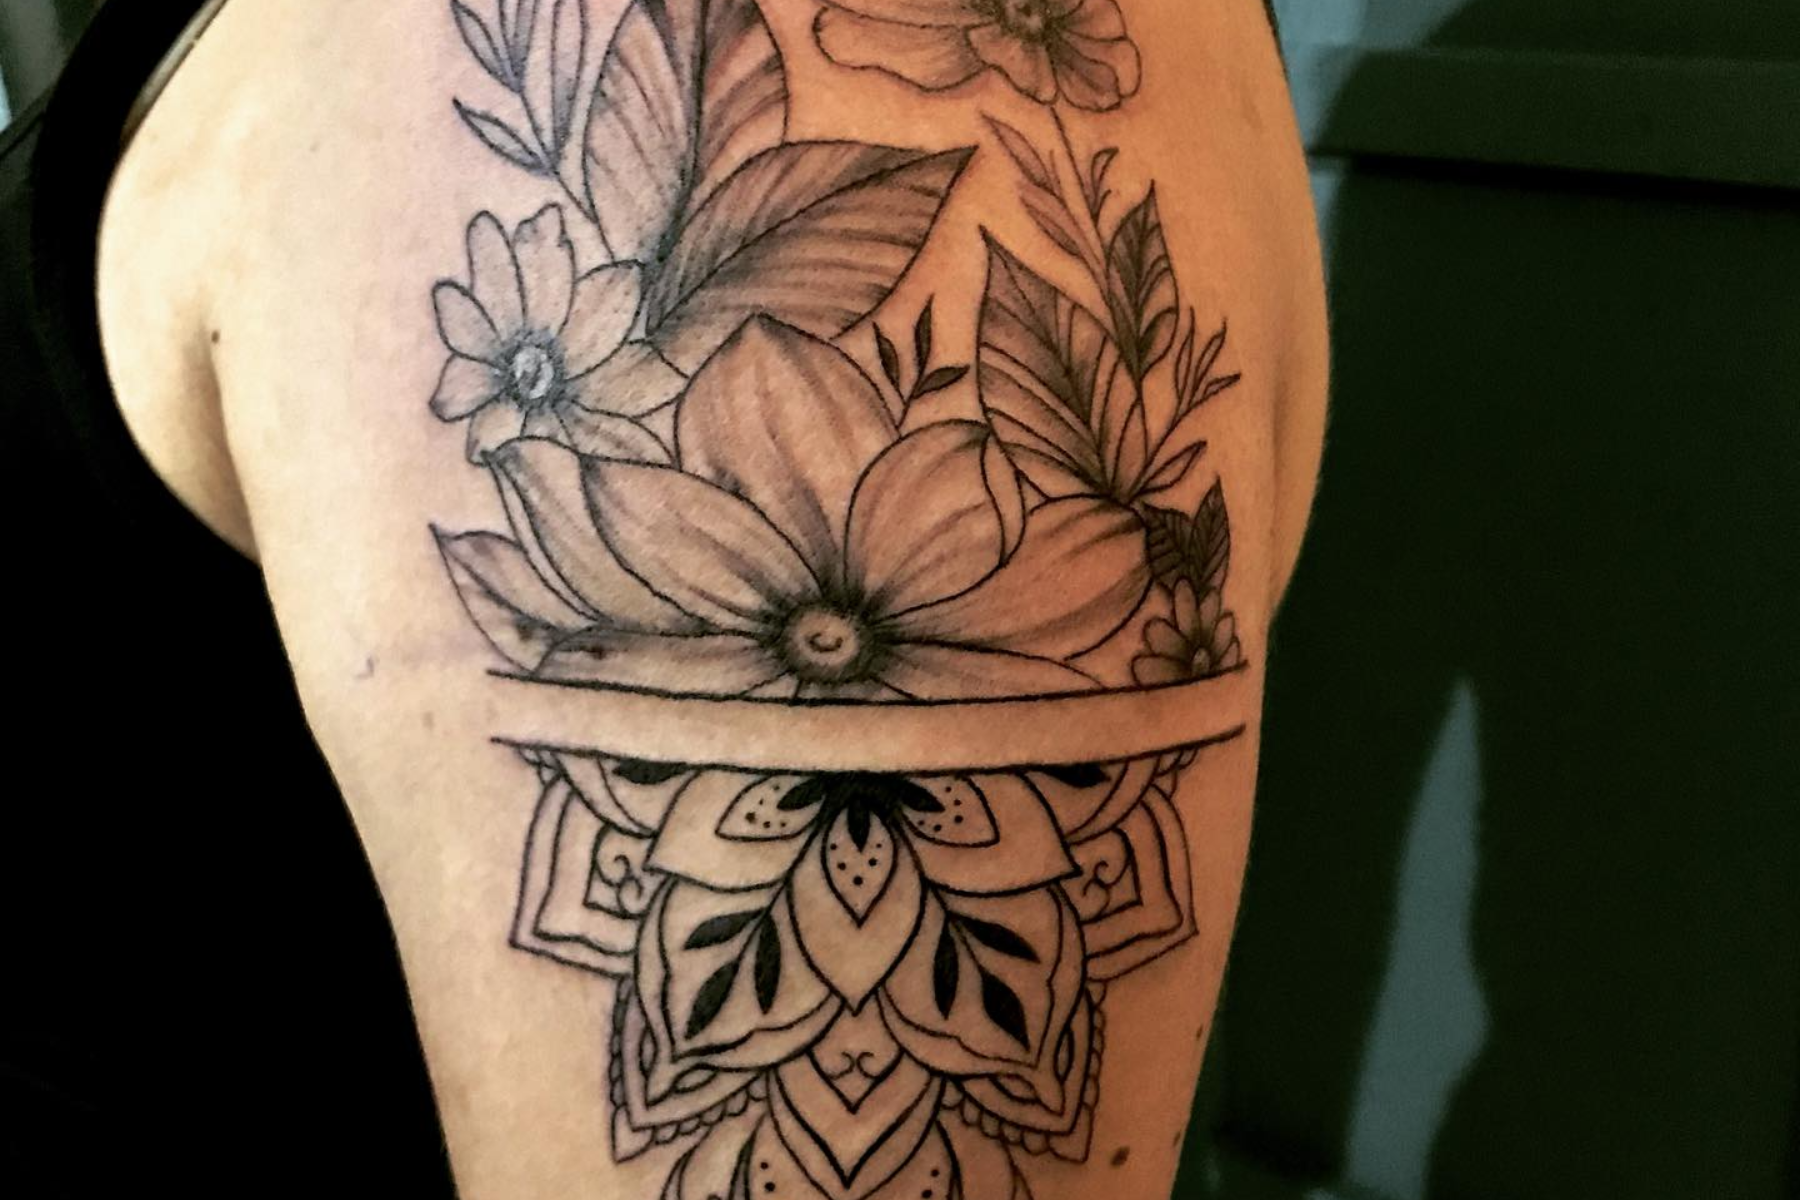 Mandala Flower Fake Tattoo - Geometry Totem Temporary Tattoos DIY Stickers  1pc S | eBay